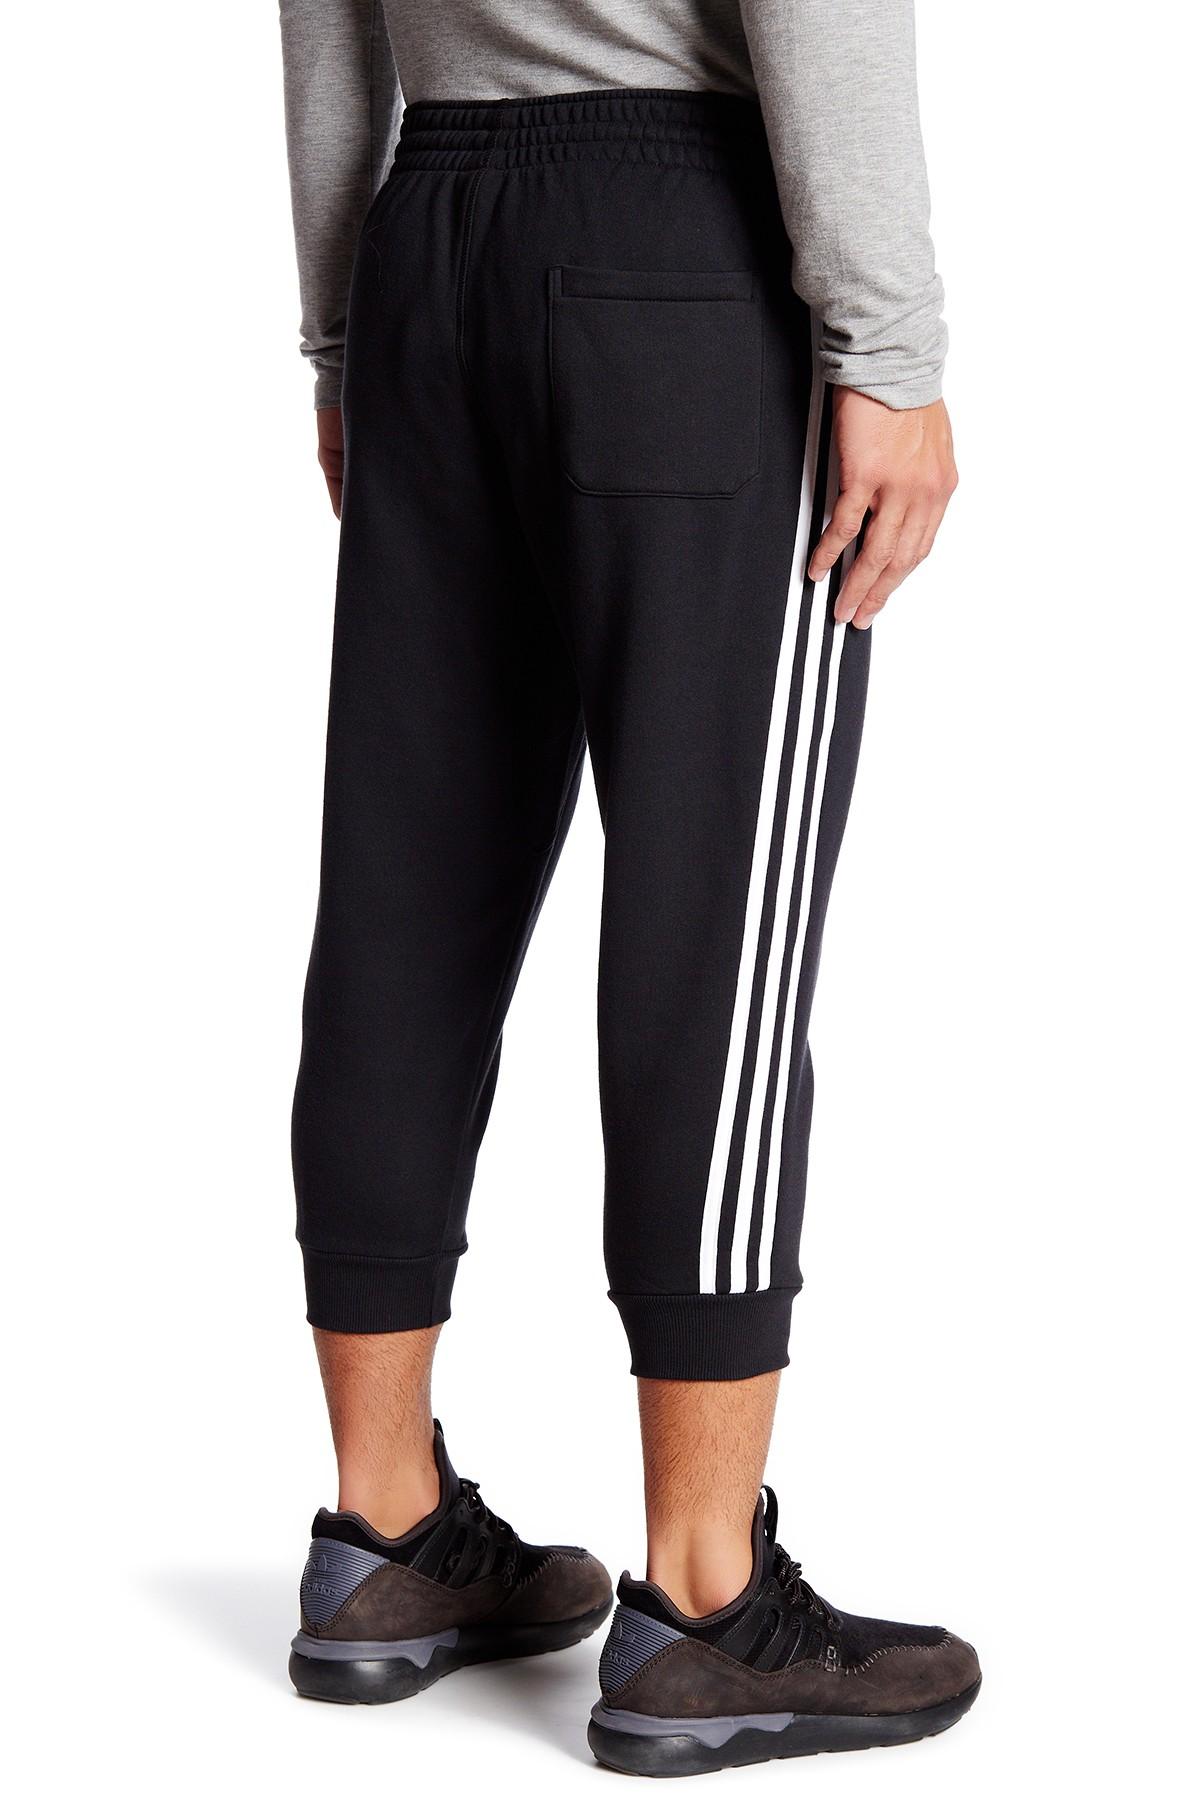 adidas Originals Cotton Slim 3-stripe Cropped Pant in Black for Men - Lyst